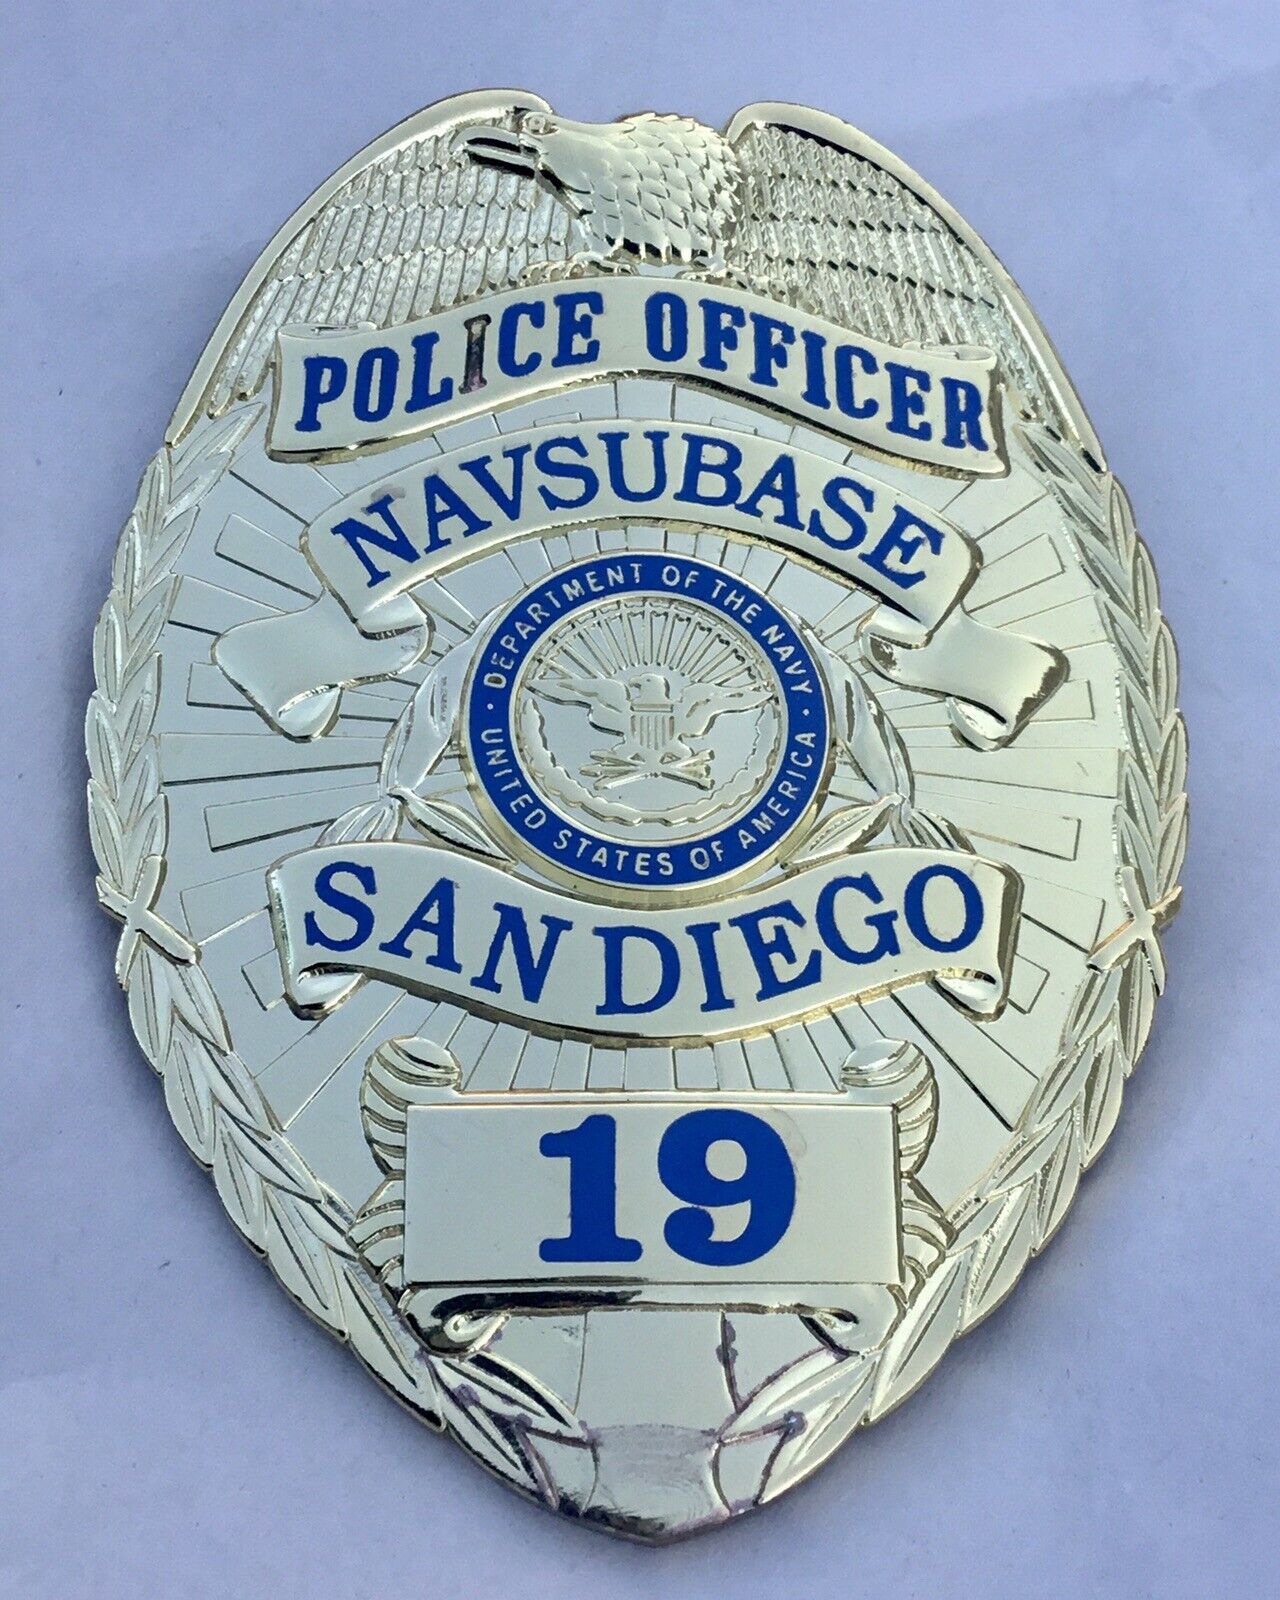 obsolete badge navy sub base san diego california